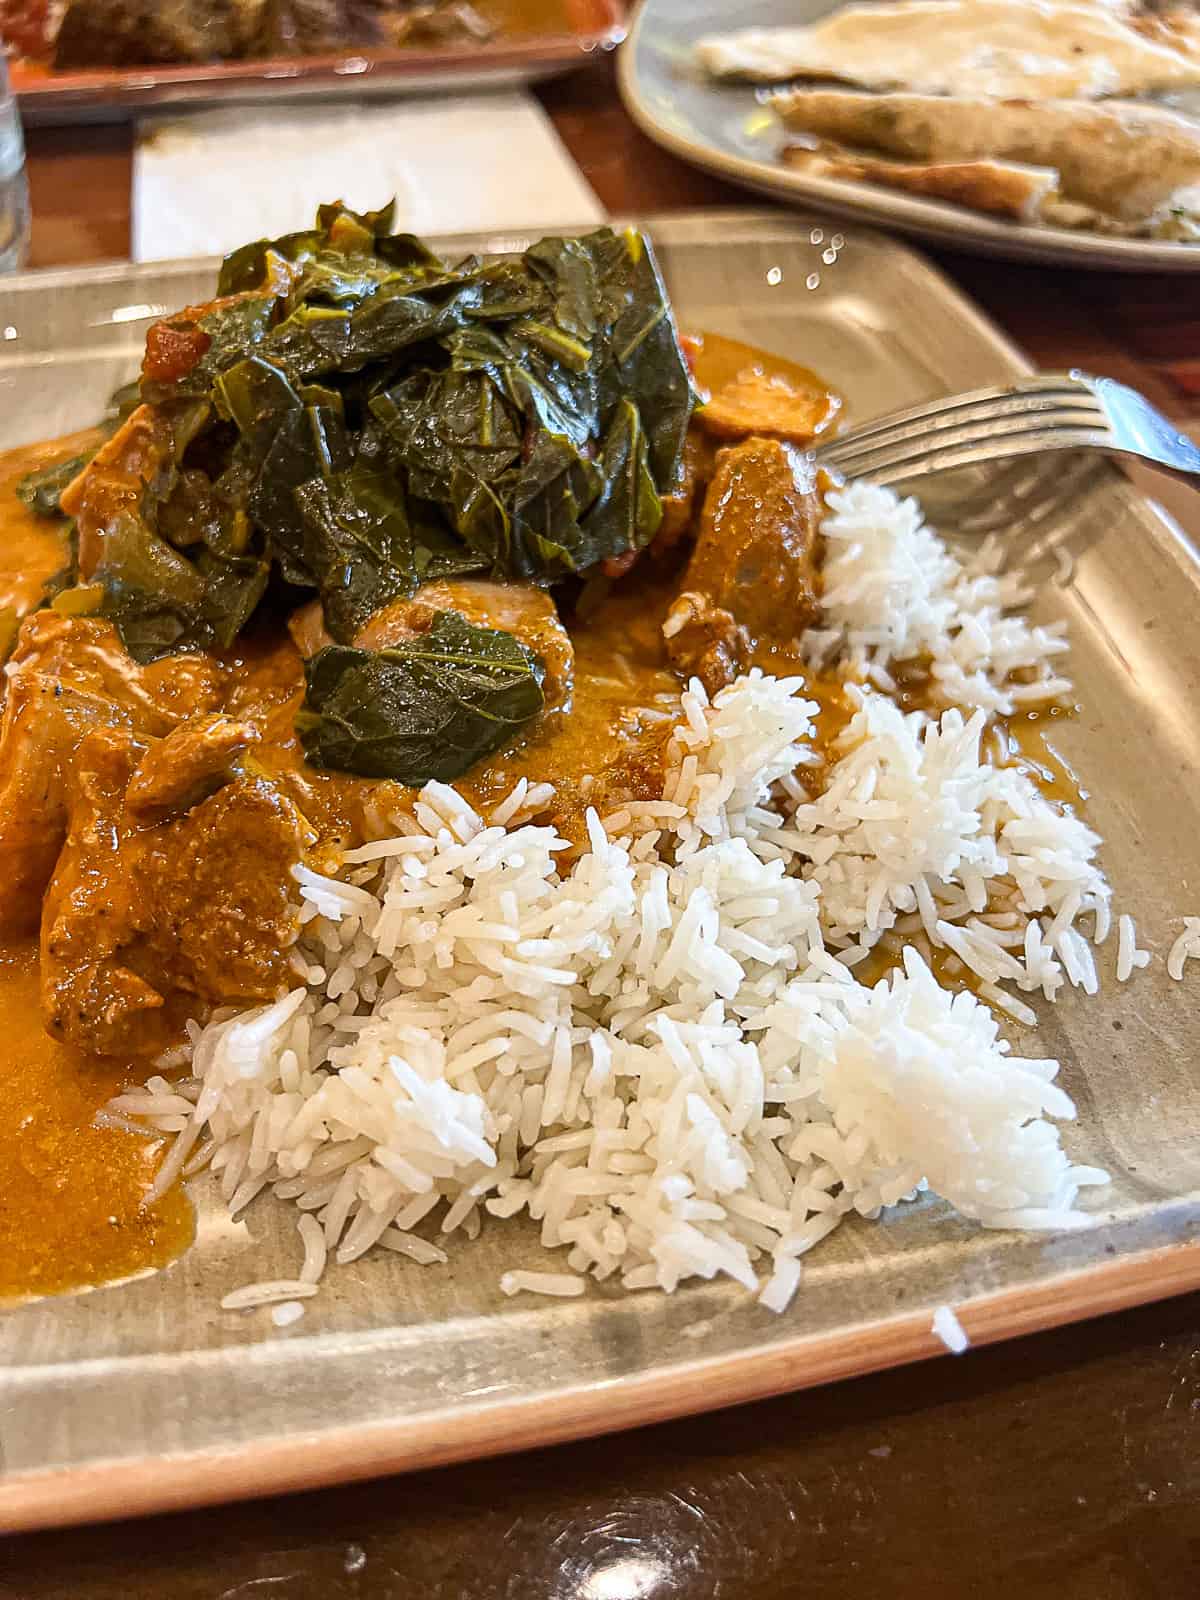 Butter Chicken Indian Lunch Menu Item at Sanaa Restaurant at Animal Kingdom Walt Disney World Resort